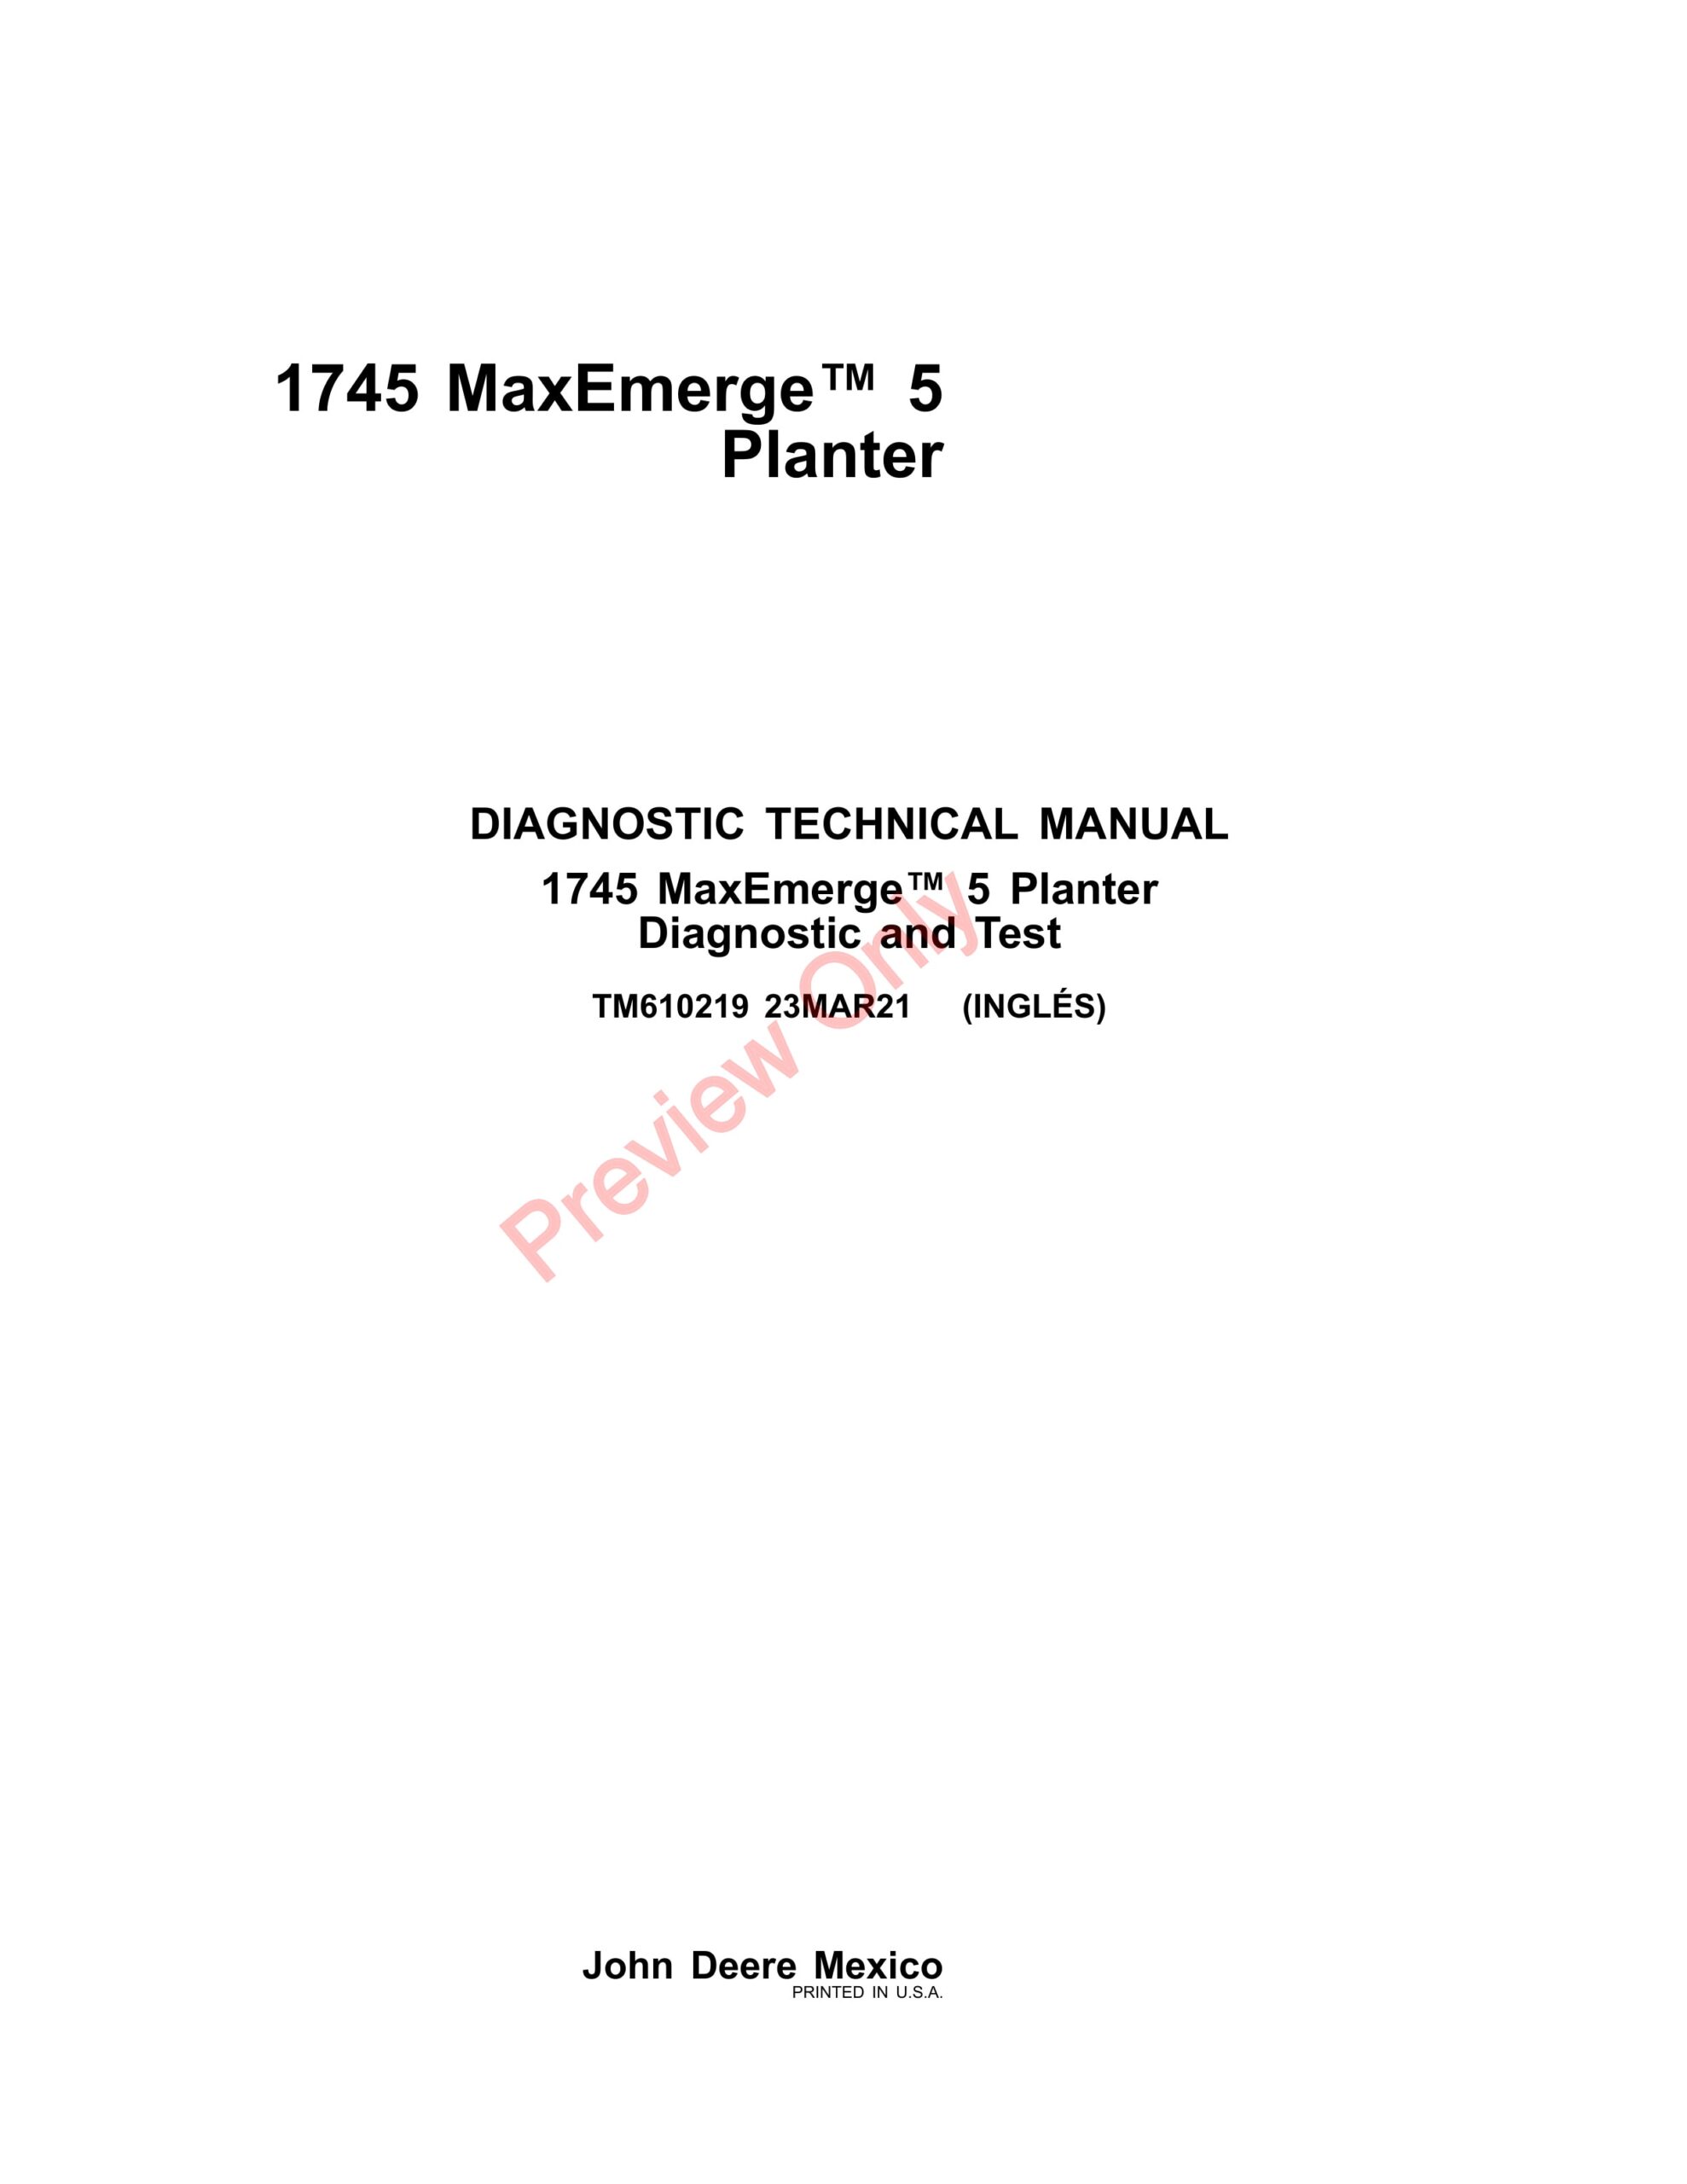 John Deere 1745 MaxEmerge 5 Planter Diagnostic Technical Manual TM610219 23MAR21-1